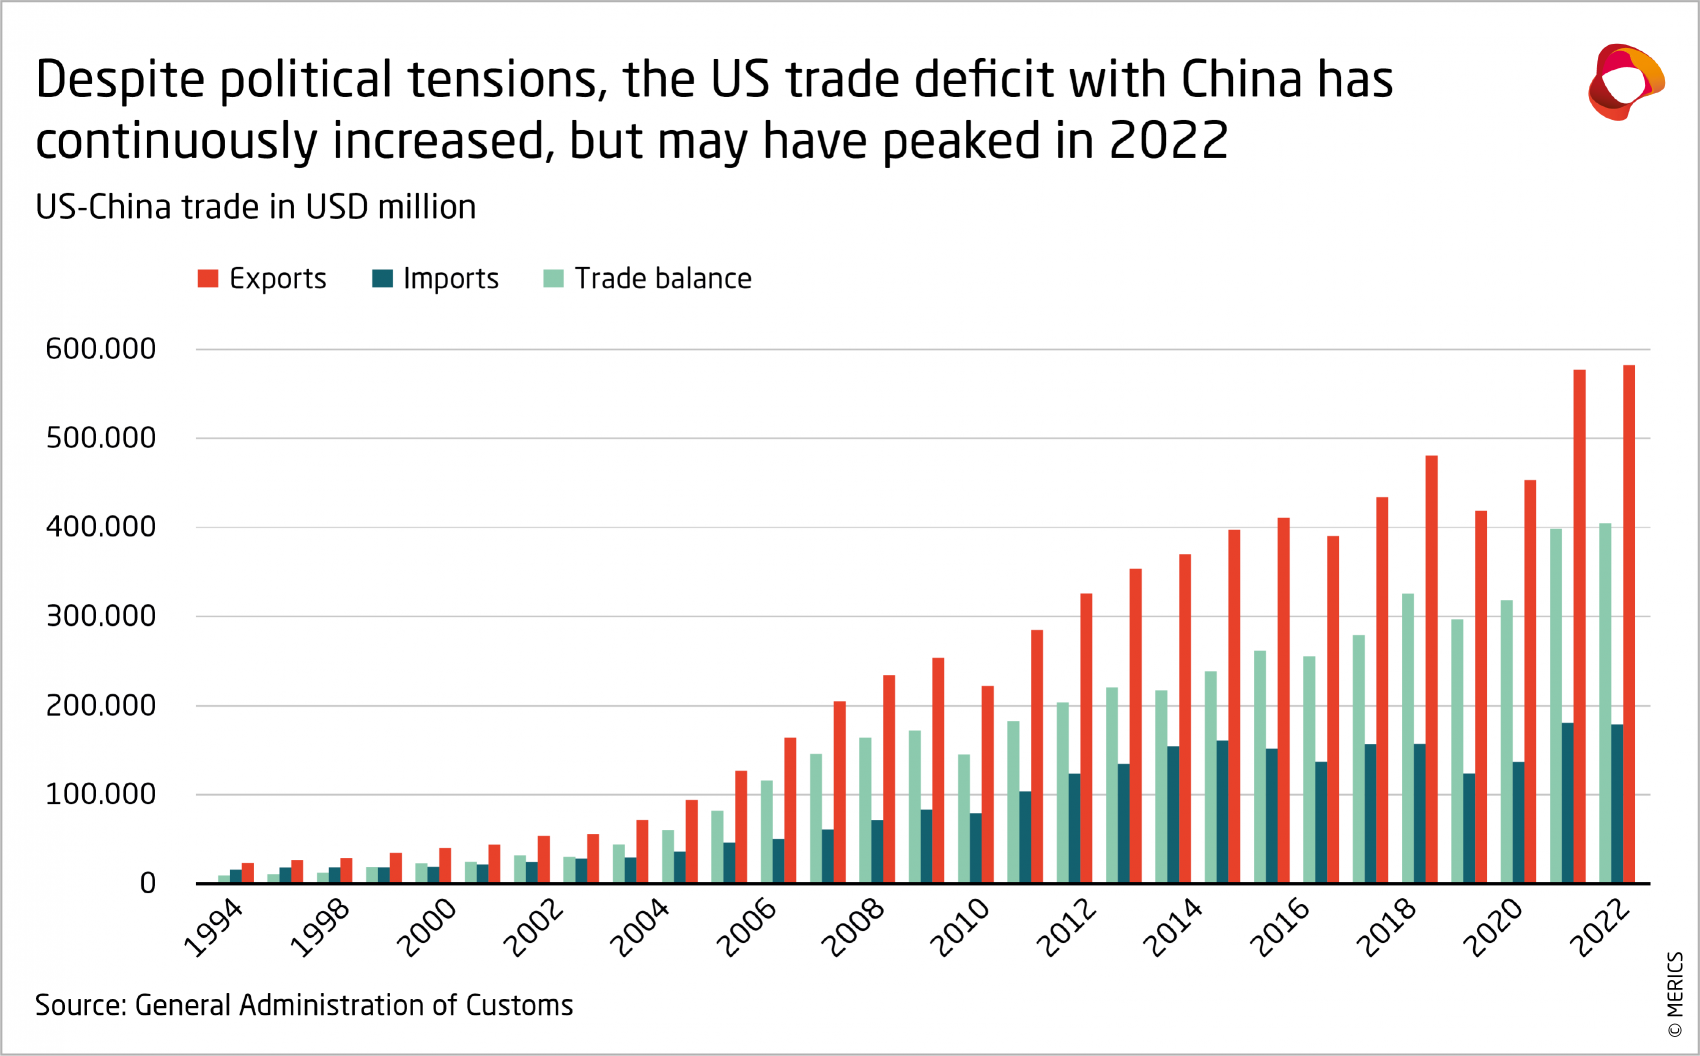 US-China trade relations